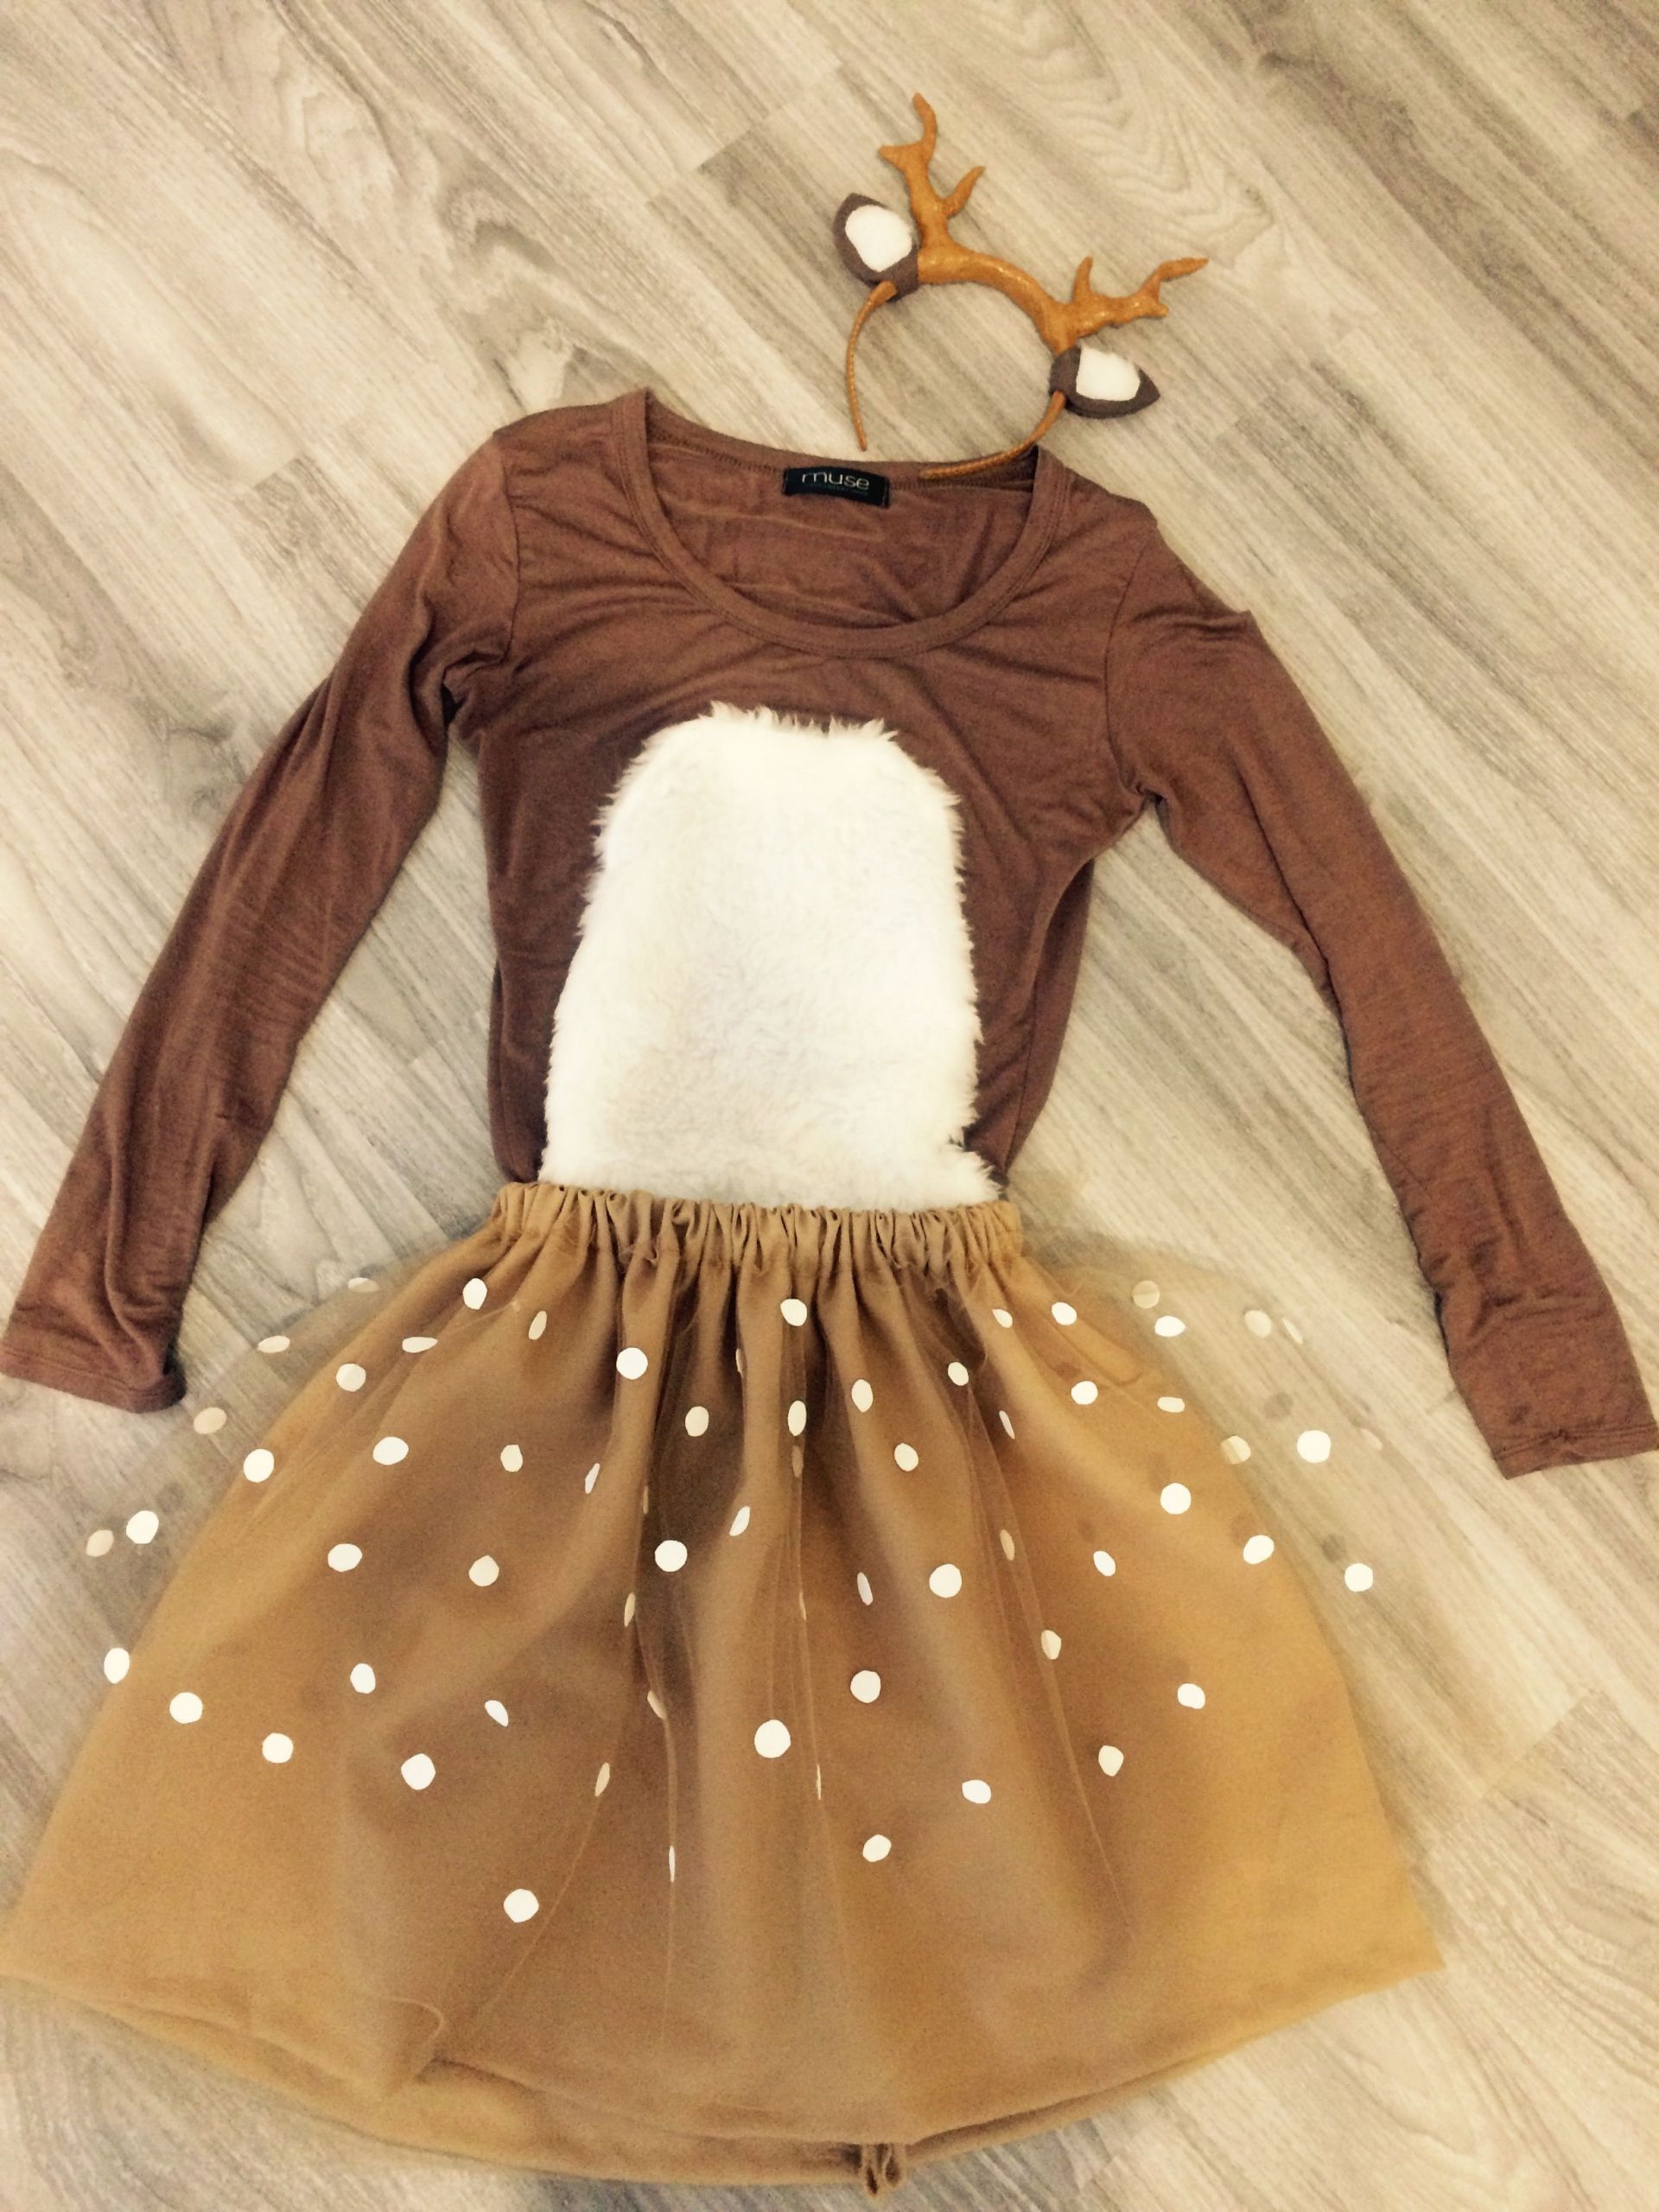 Toddler Deer Costume DIY
 Deer costume in 2020